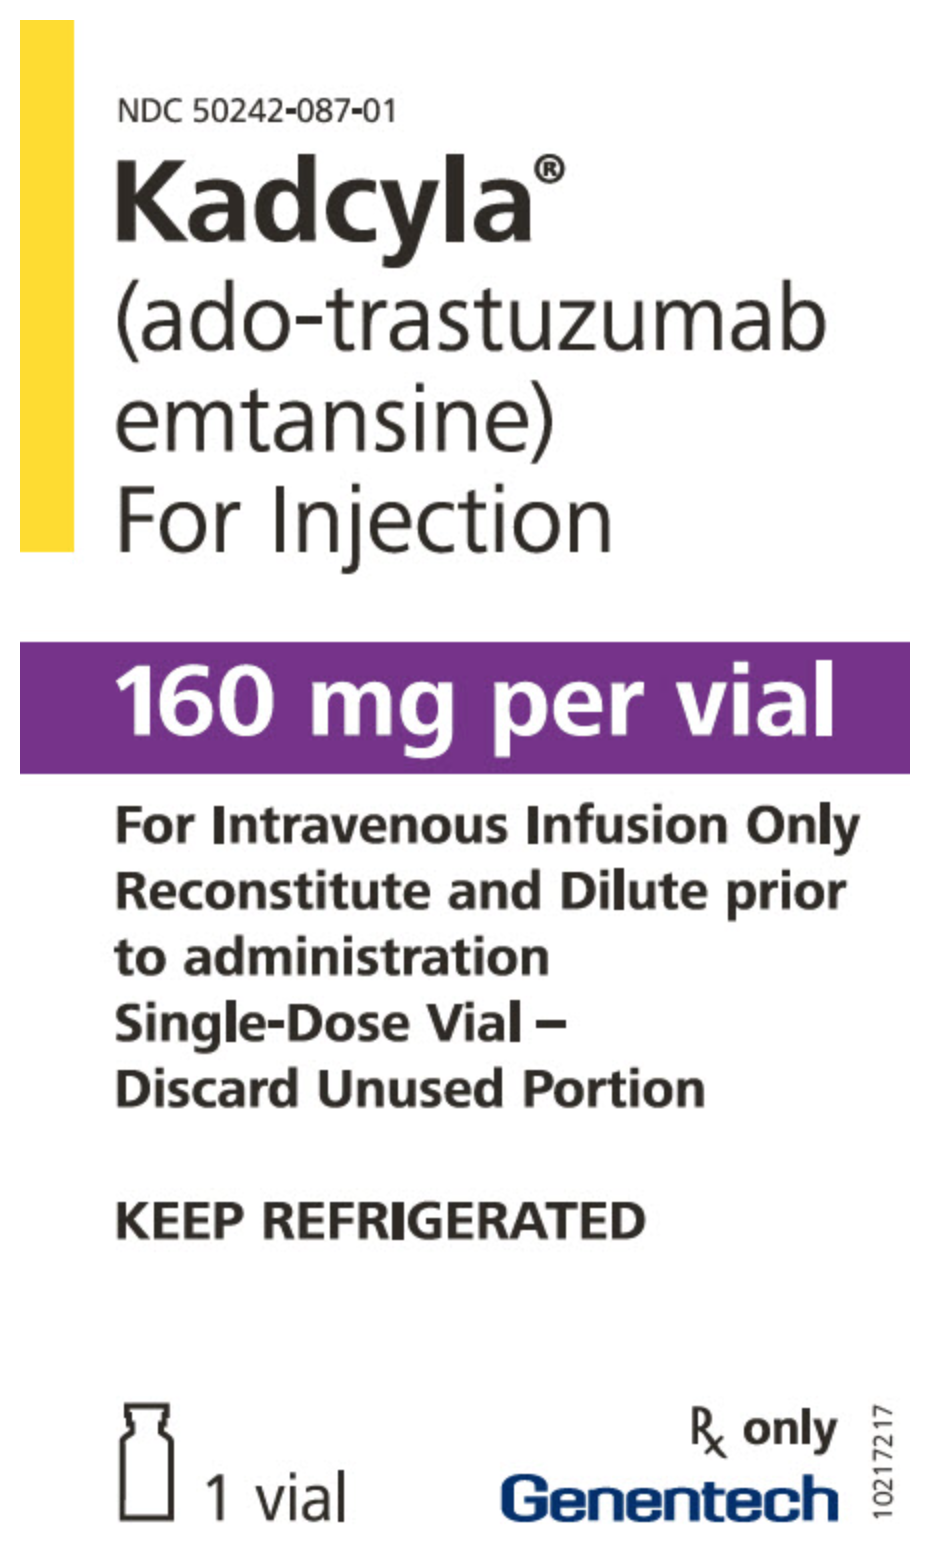 File:Ado-trastuzumab emtansine packaging 160mg.png